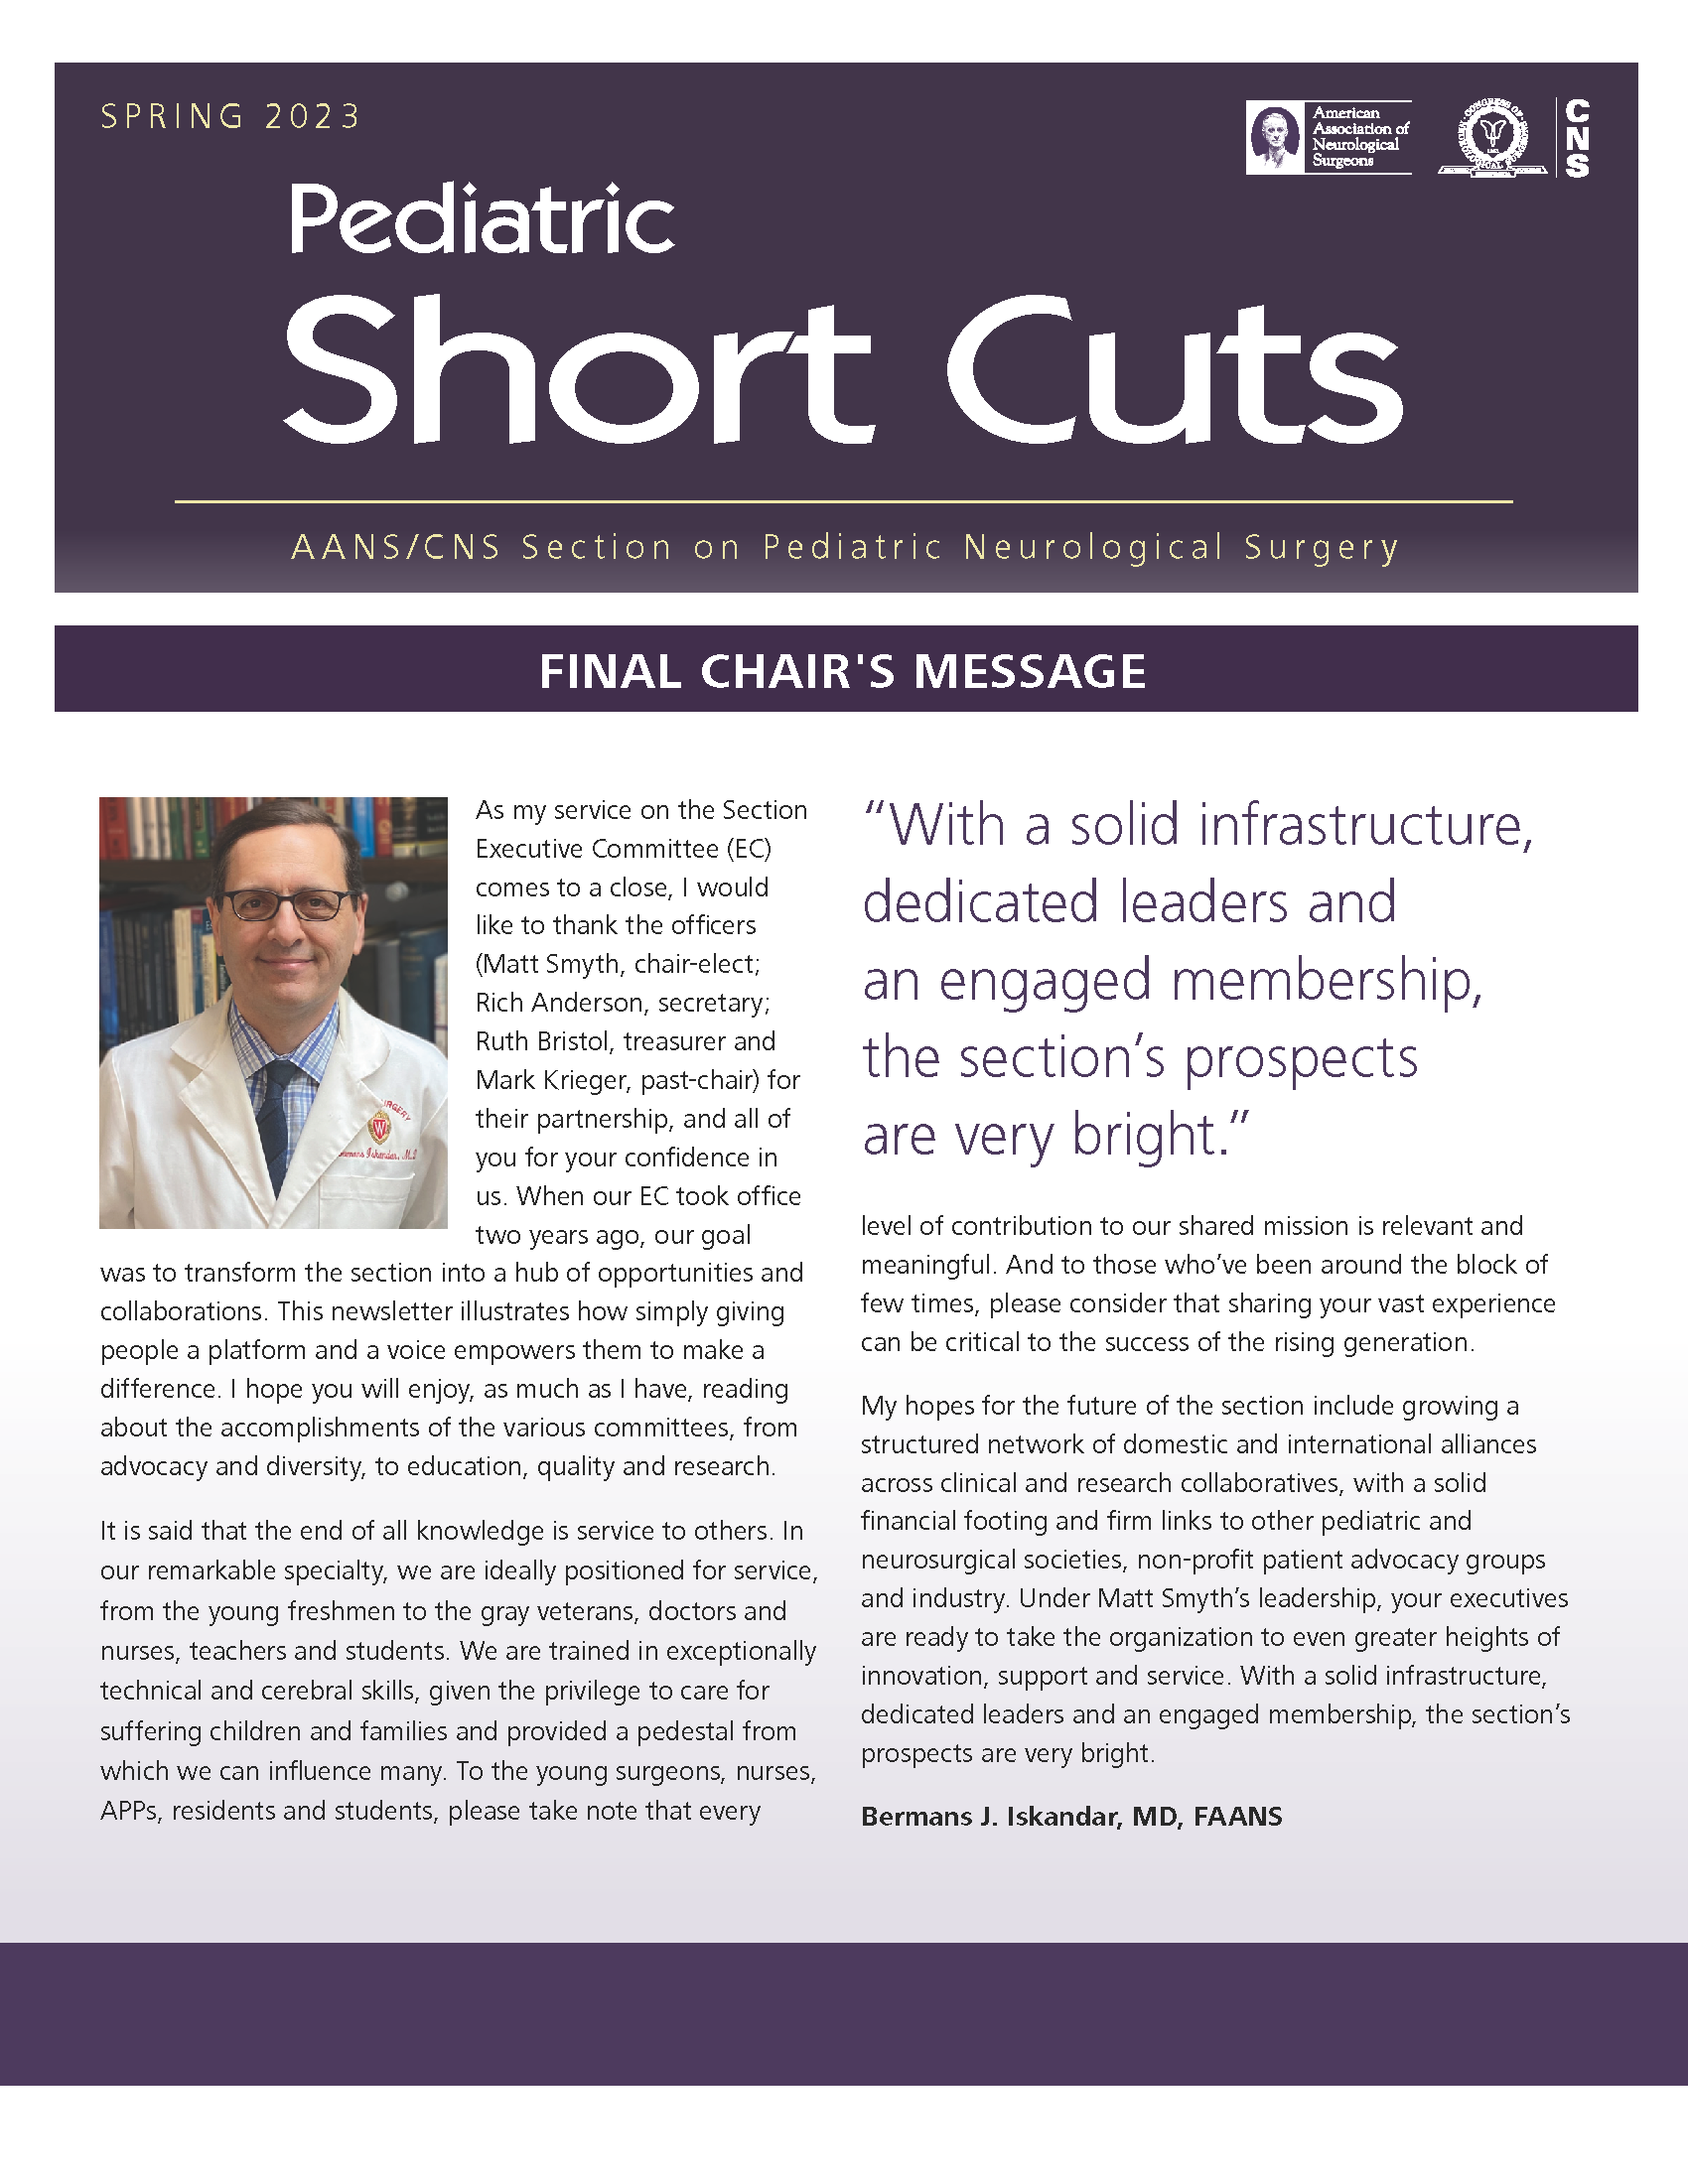 Spring 2023 Pediatric Short Cuts